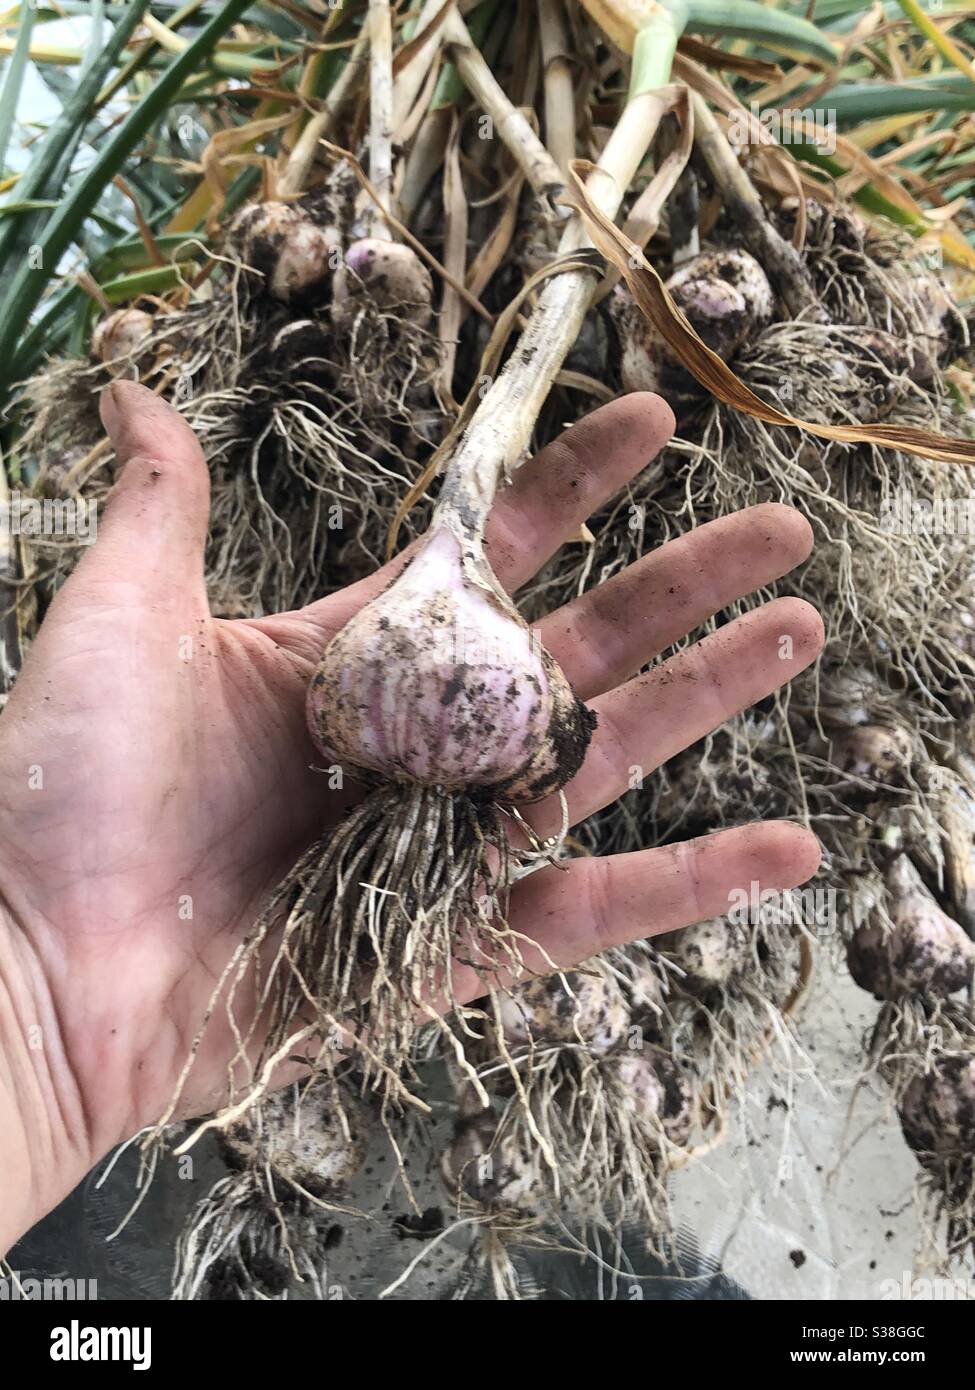 Harvesting garlic form the harden Stock Photo